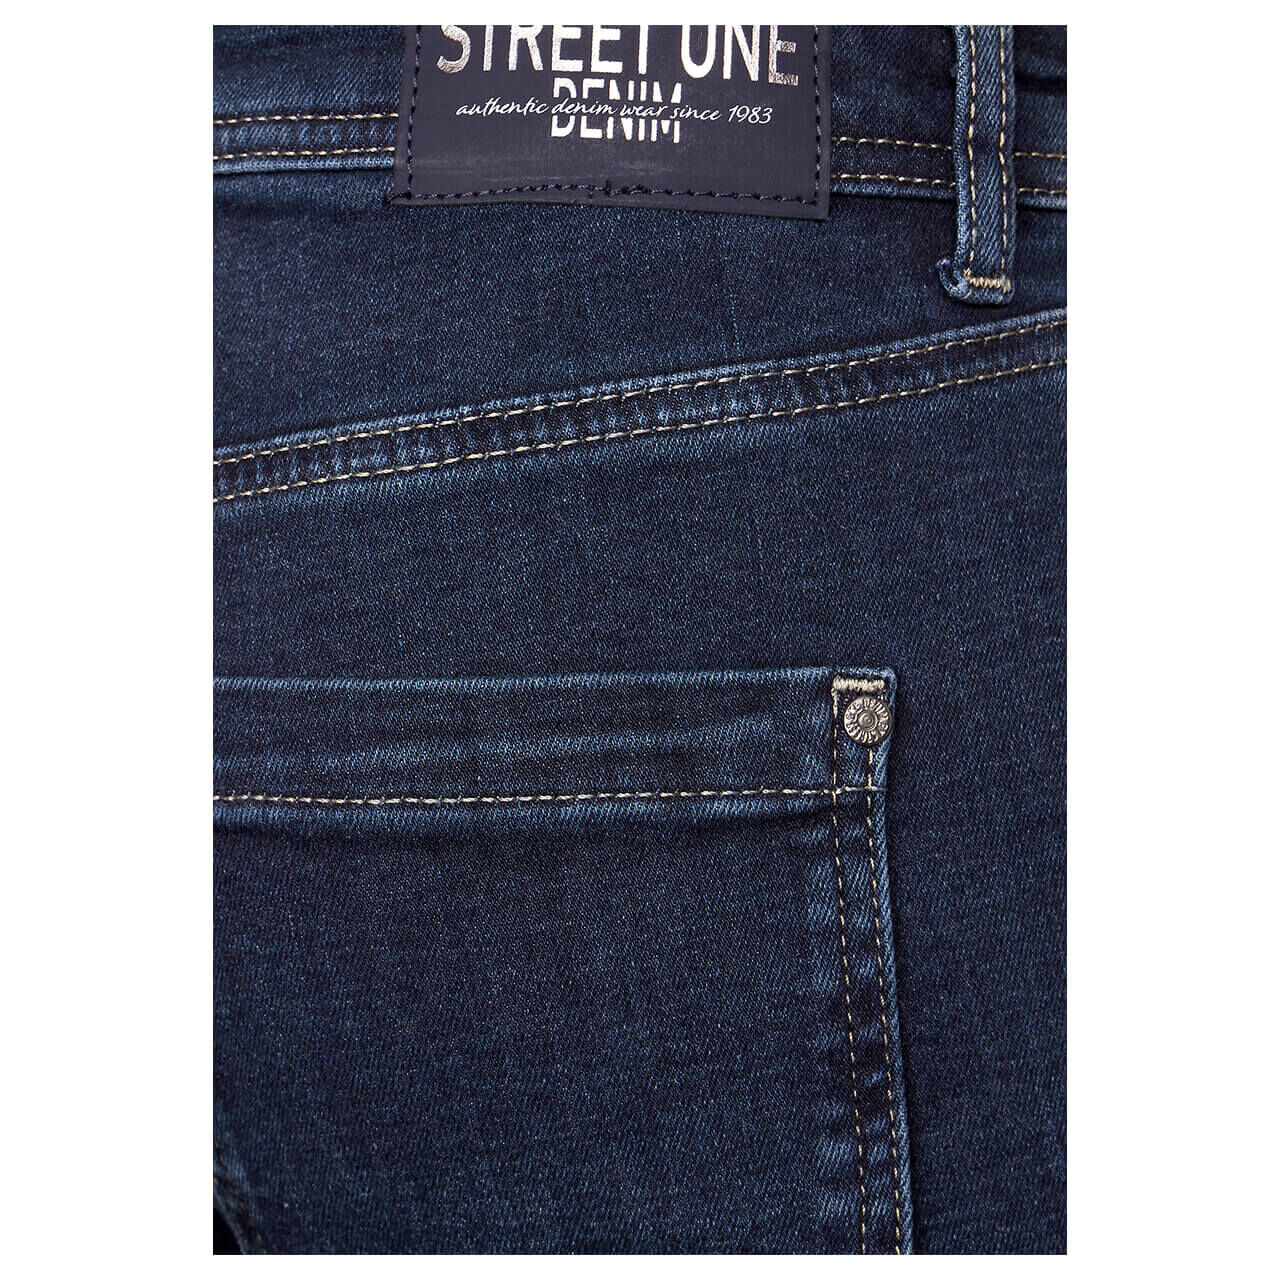 Street One Jane Jeans authentic indigo thermo denim